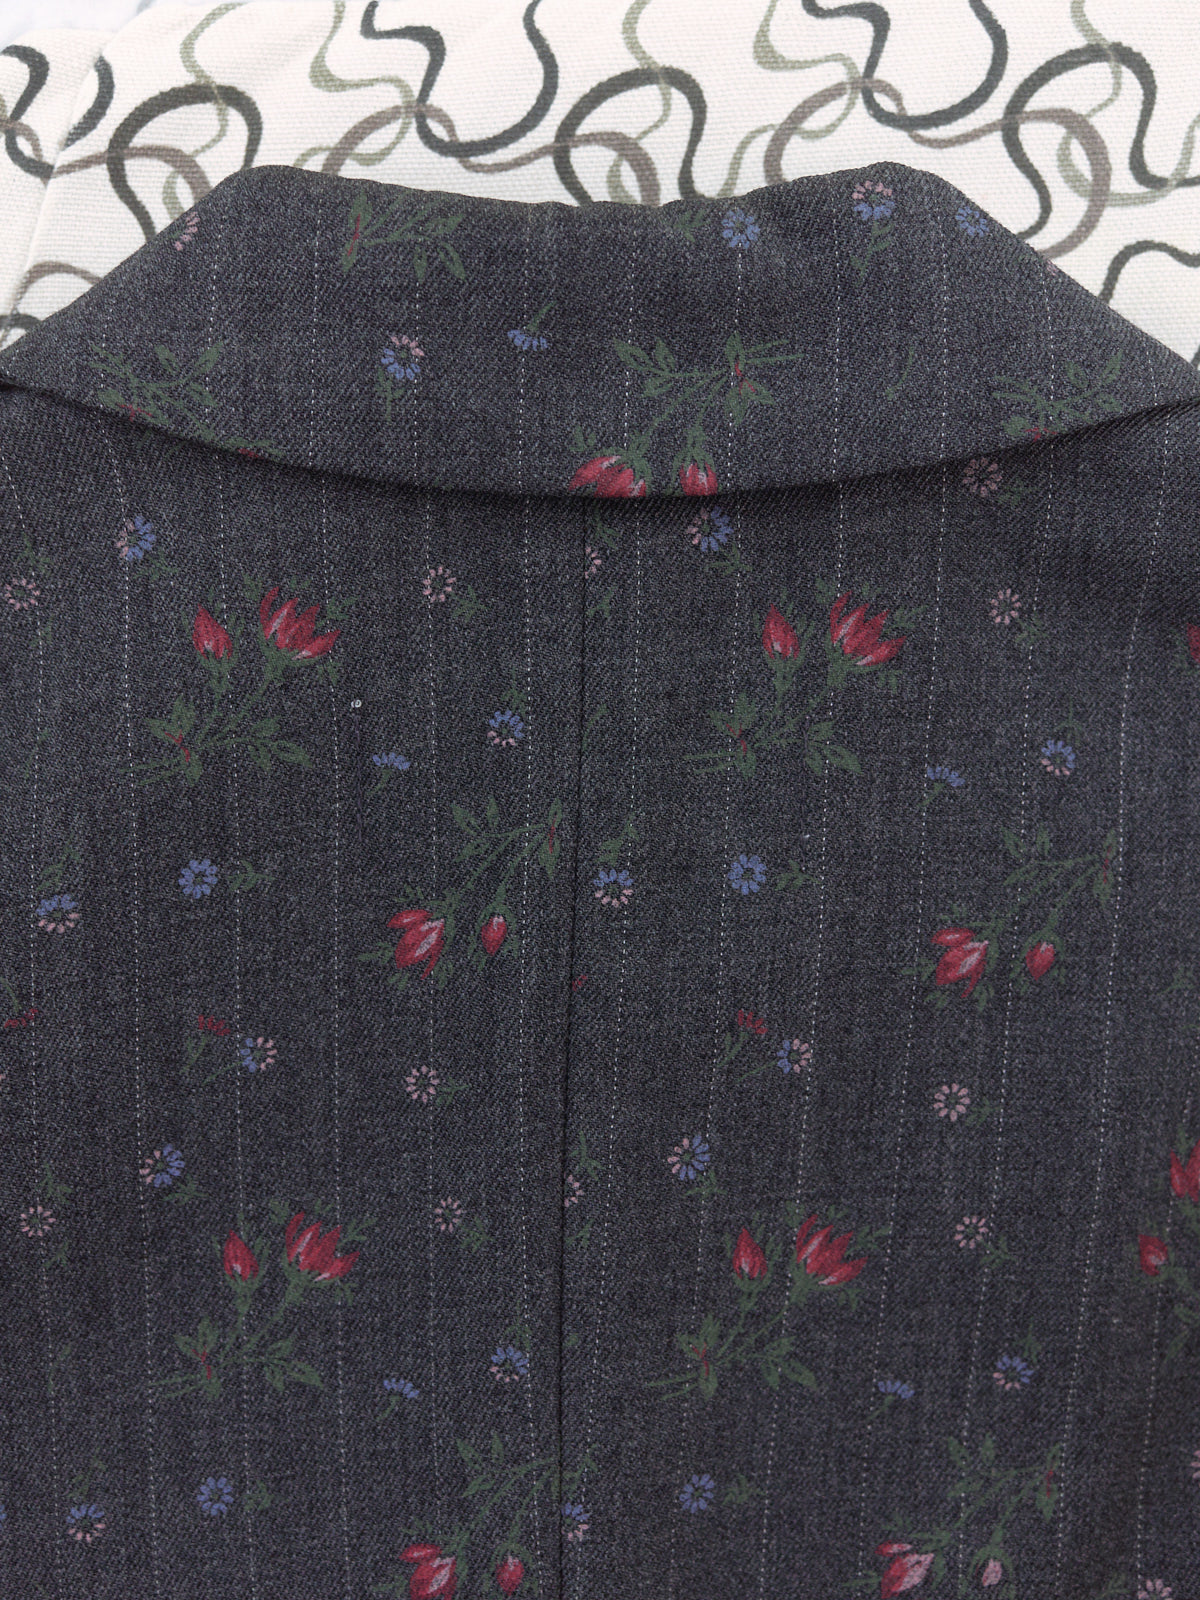 Robe de Chambre Comme des Garcons 1993 grey wool stripe floral print jacket M S